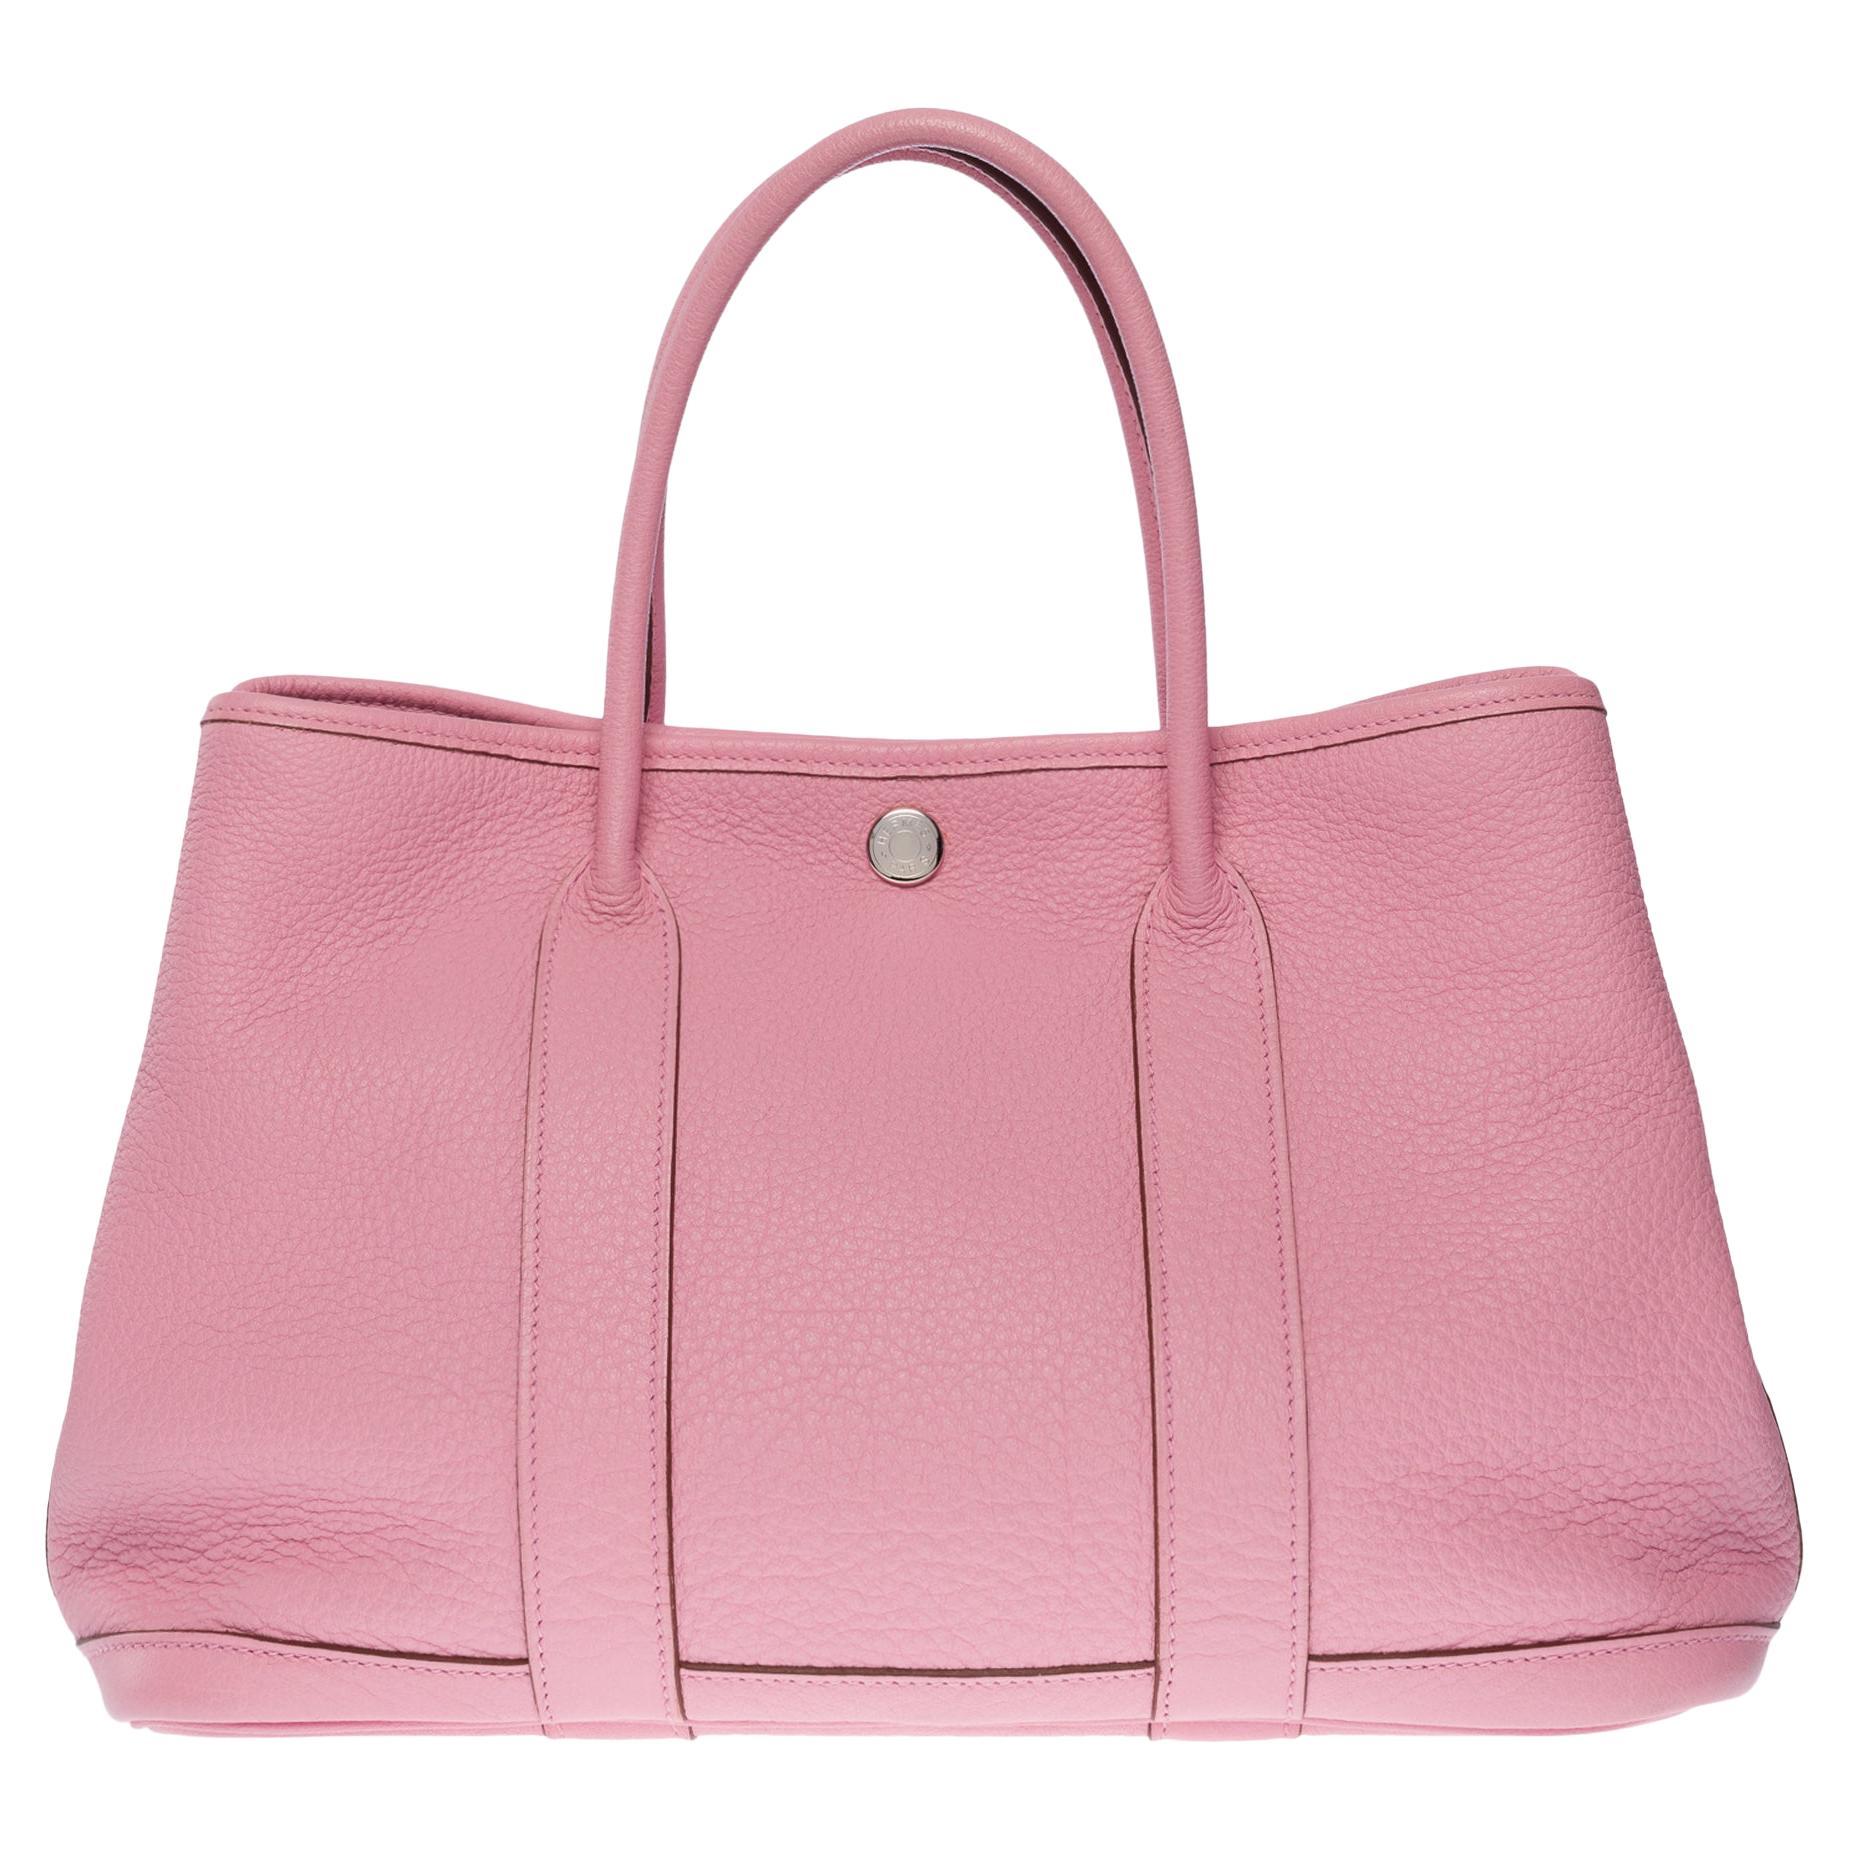 Superbe sac fourre-tout Hermès Garden Party TPM en cuir Negonda rose sakura, SHW en vente